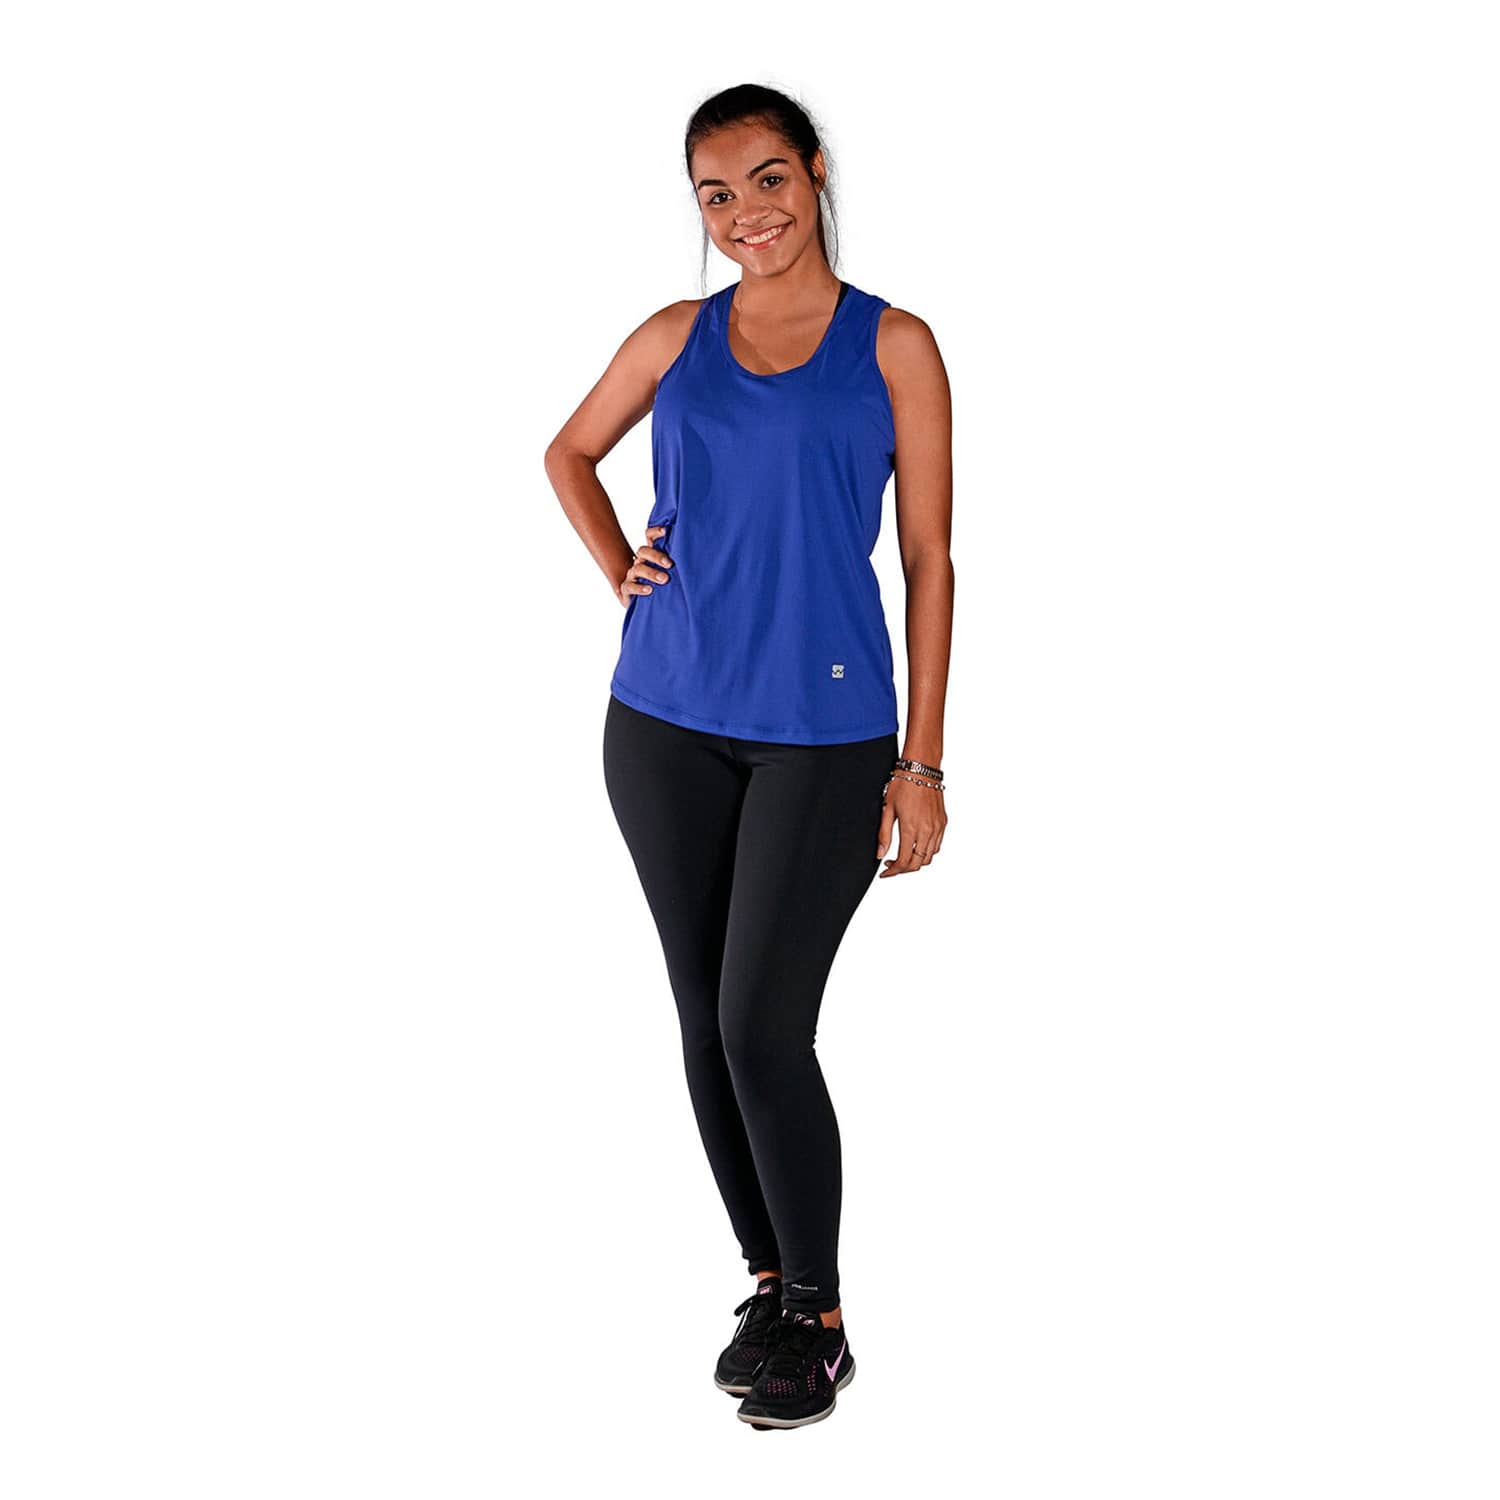 Camiseta Feminina Regata UV 50+ New Trip Azul Bic